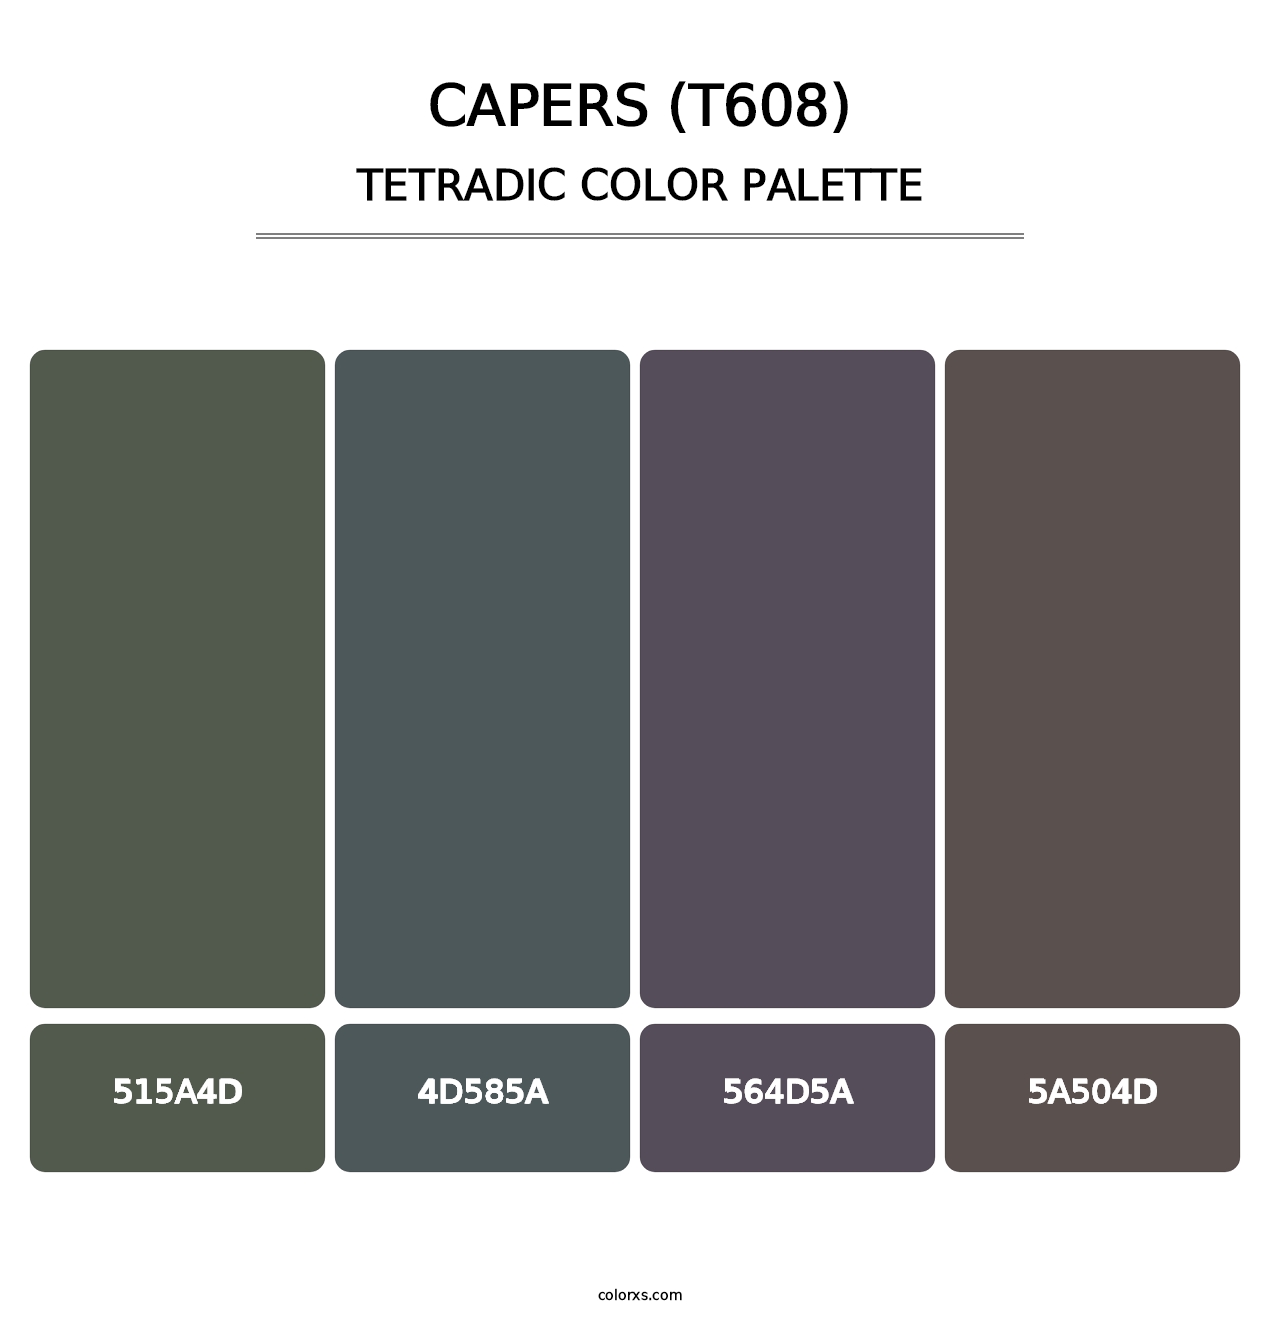 Capers (T608) - Tetradic Color Palette